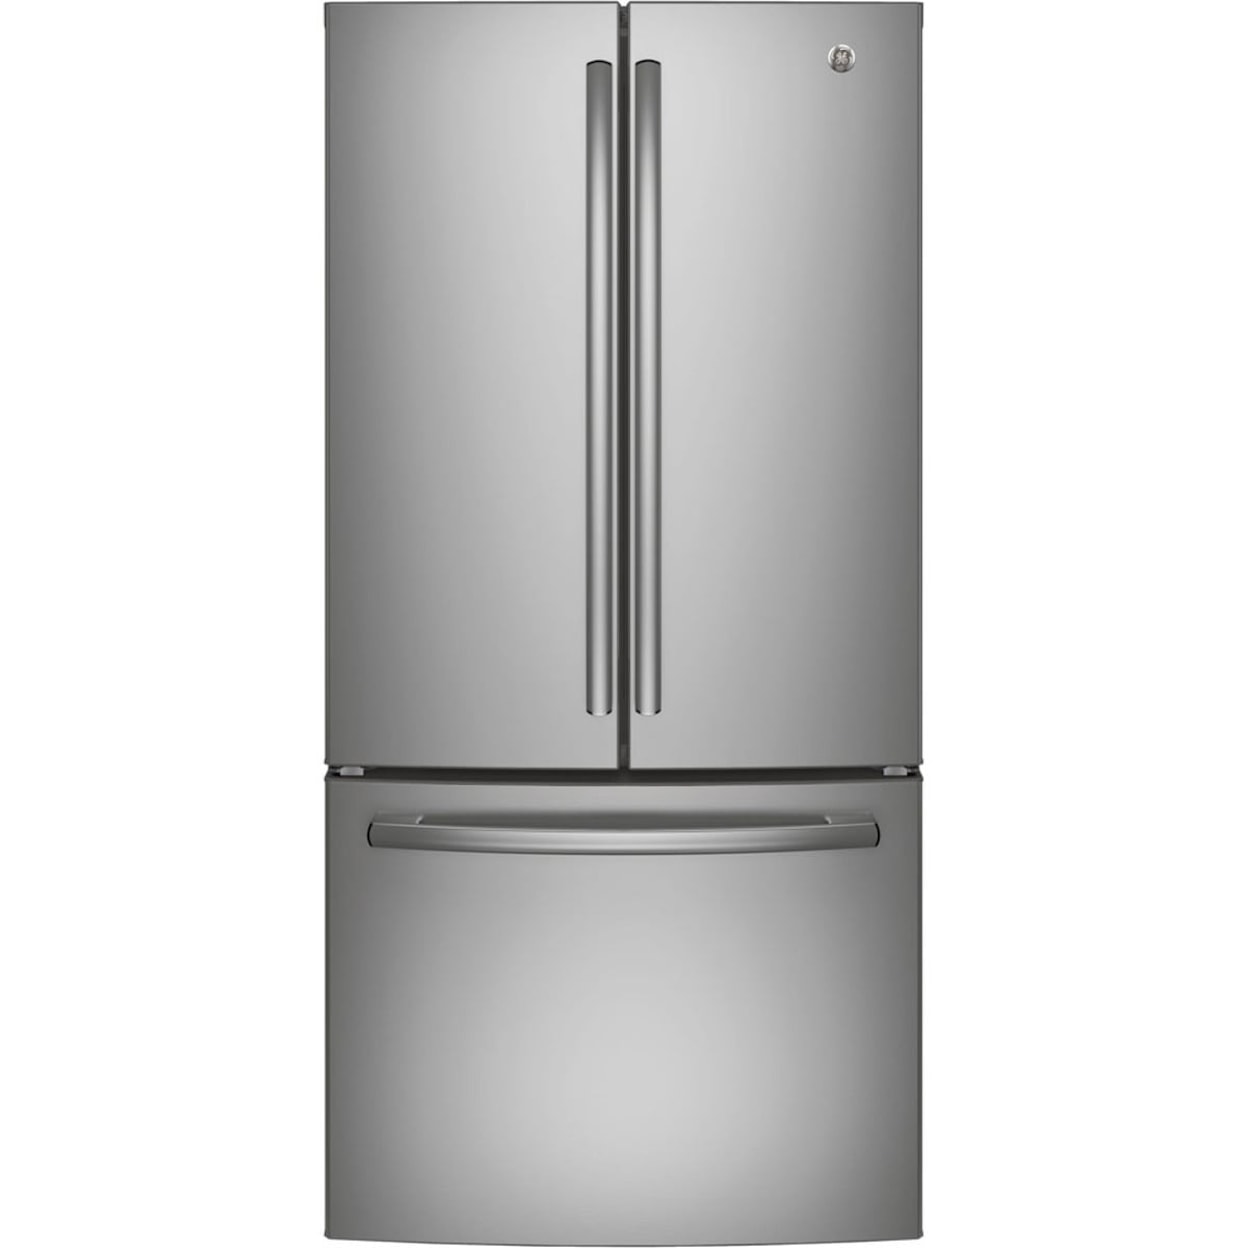 GE Appliances GE Appliances French Door Refrigerator